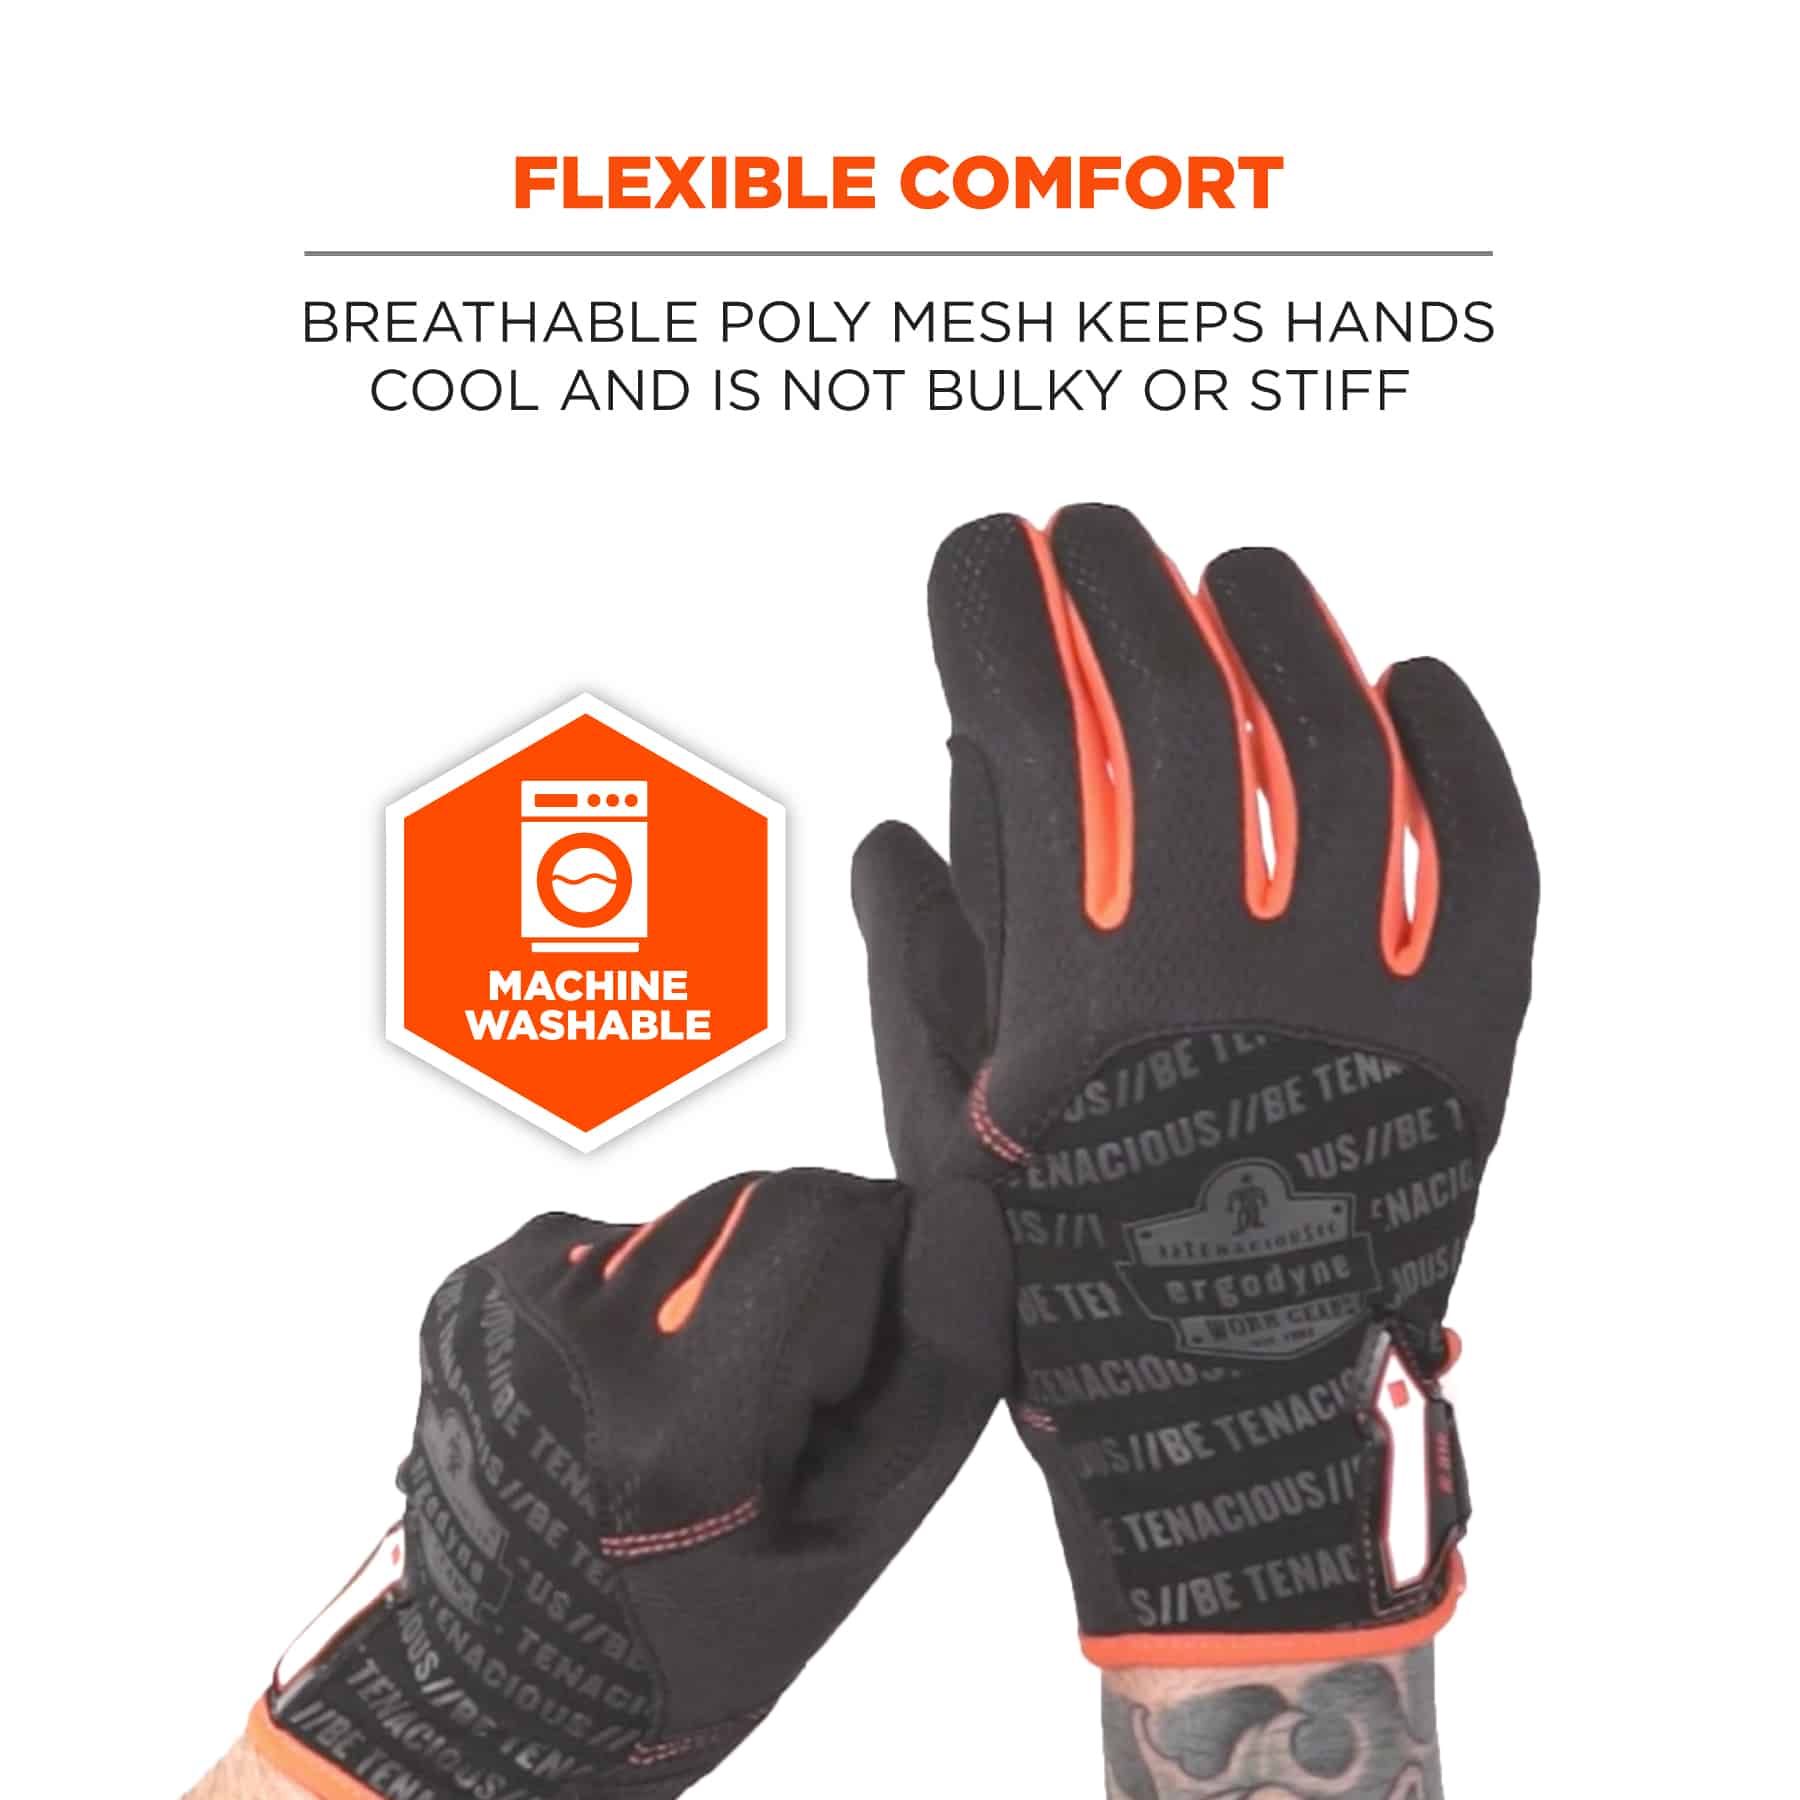 https://www.ergodyne.com/sites/default/files/product-images/17172-812-standard-utility-gloves-black-flexible-comfort.jpg